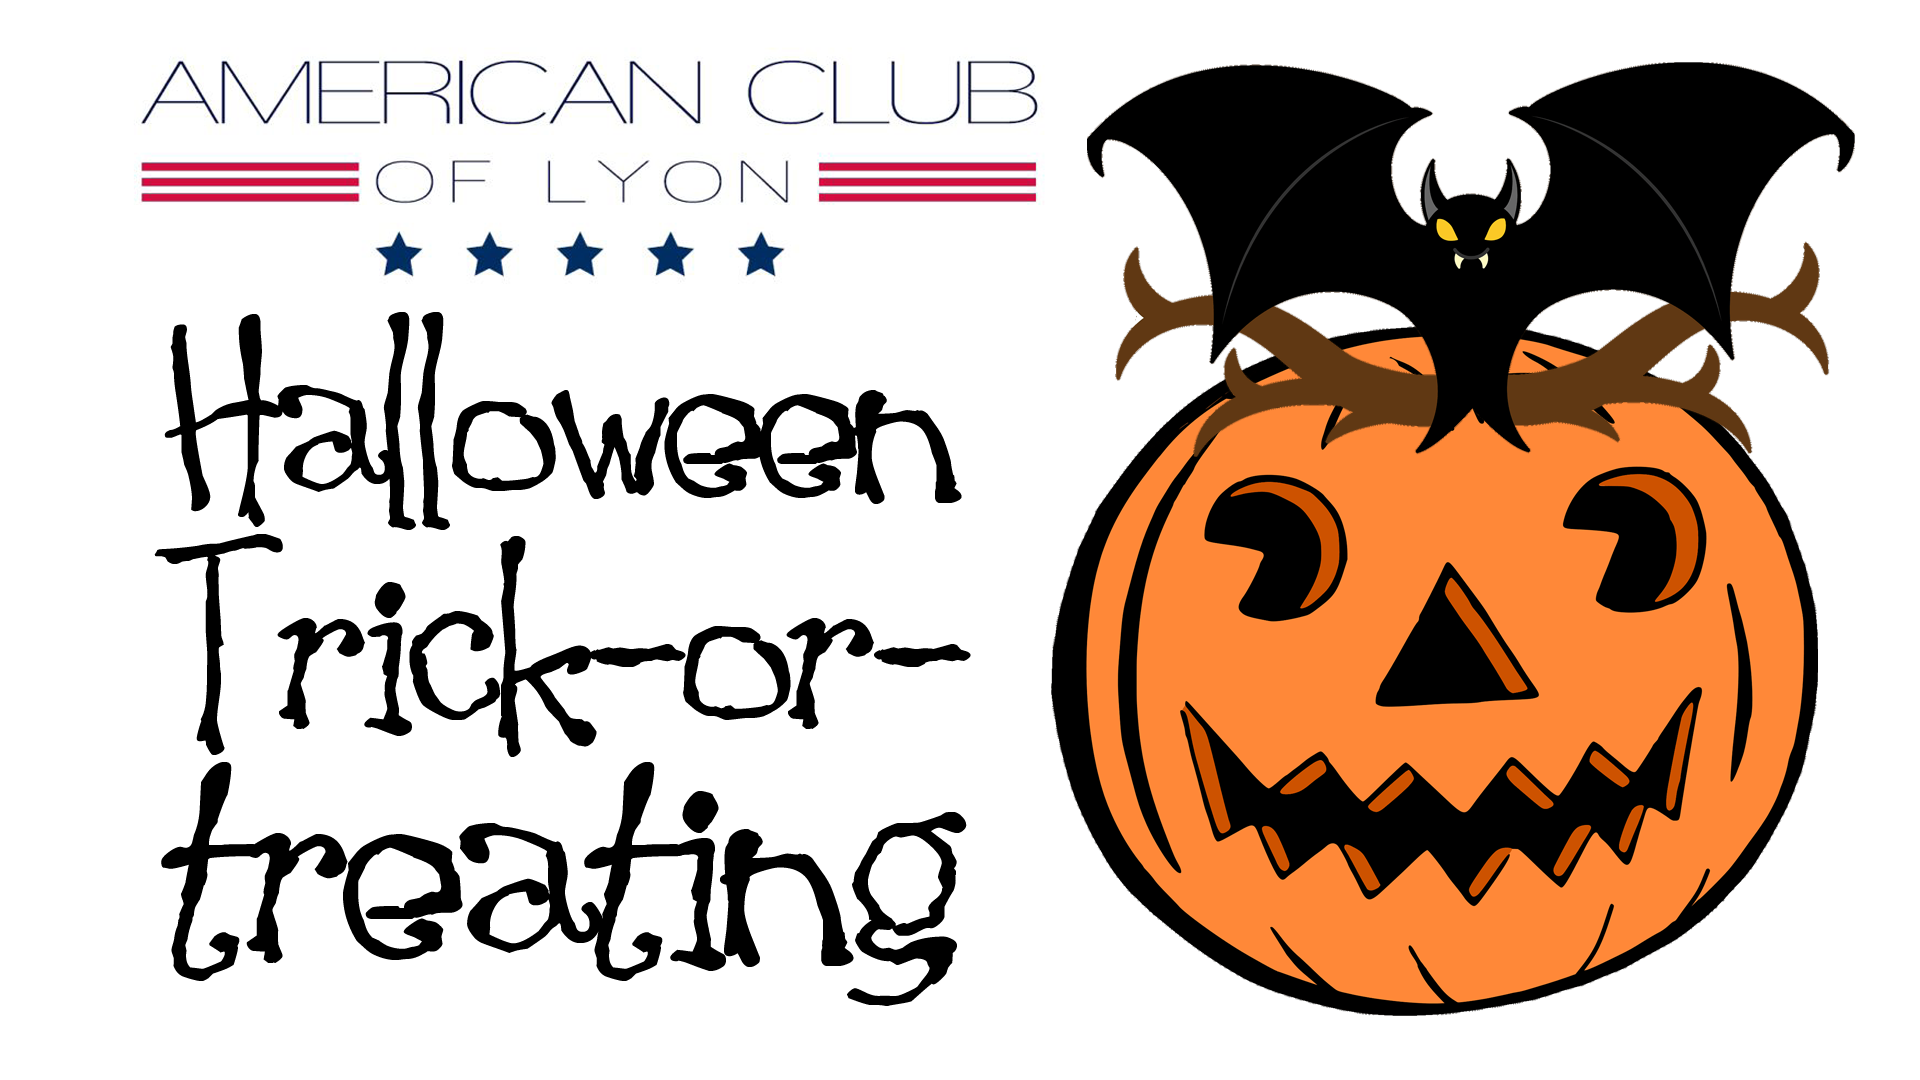 Halloween Trickortreating October 31 ⋆ American Club of Lyon